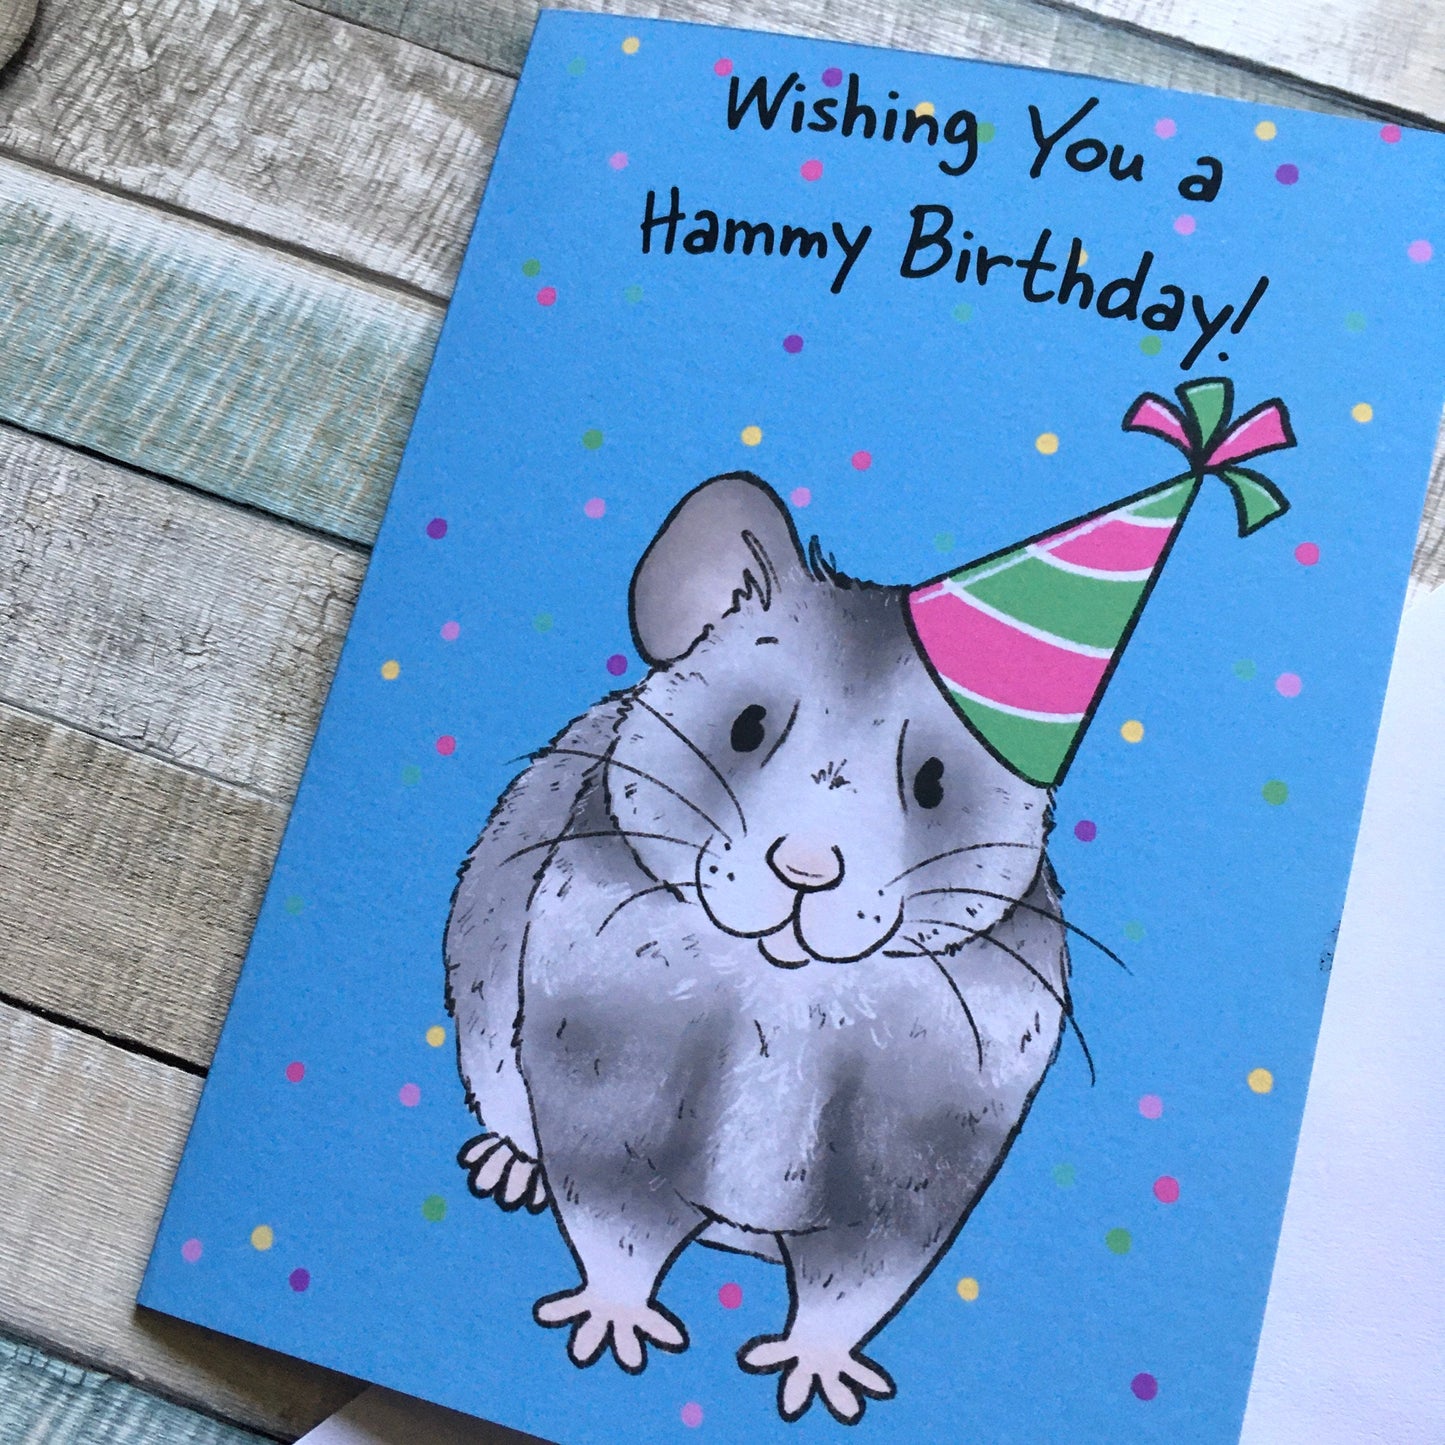 Hammy Birthday Hamster Birthday Card, A6 Birthday Card, Blank Inside, Hamster Lover Gift